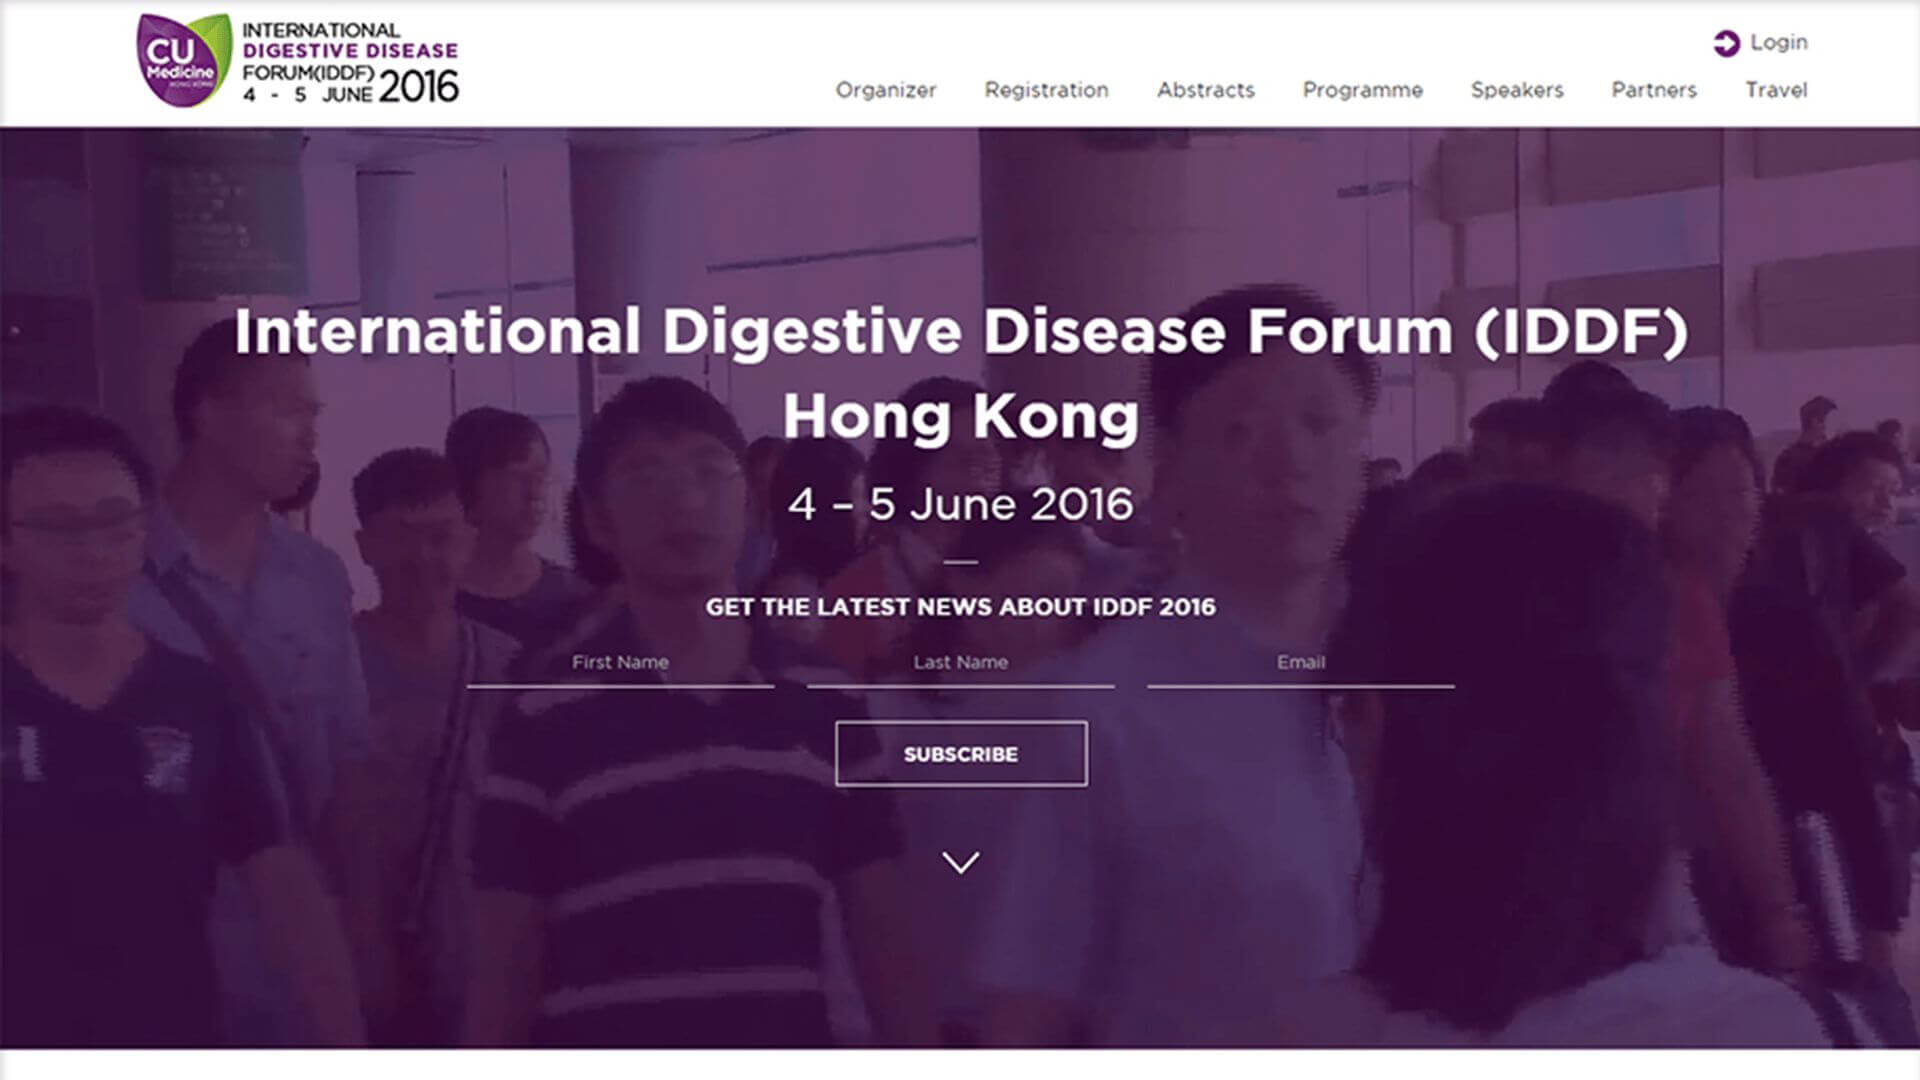 The International Digestive Disease Forum (IDDF) 2016